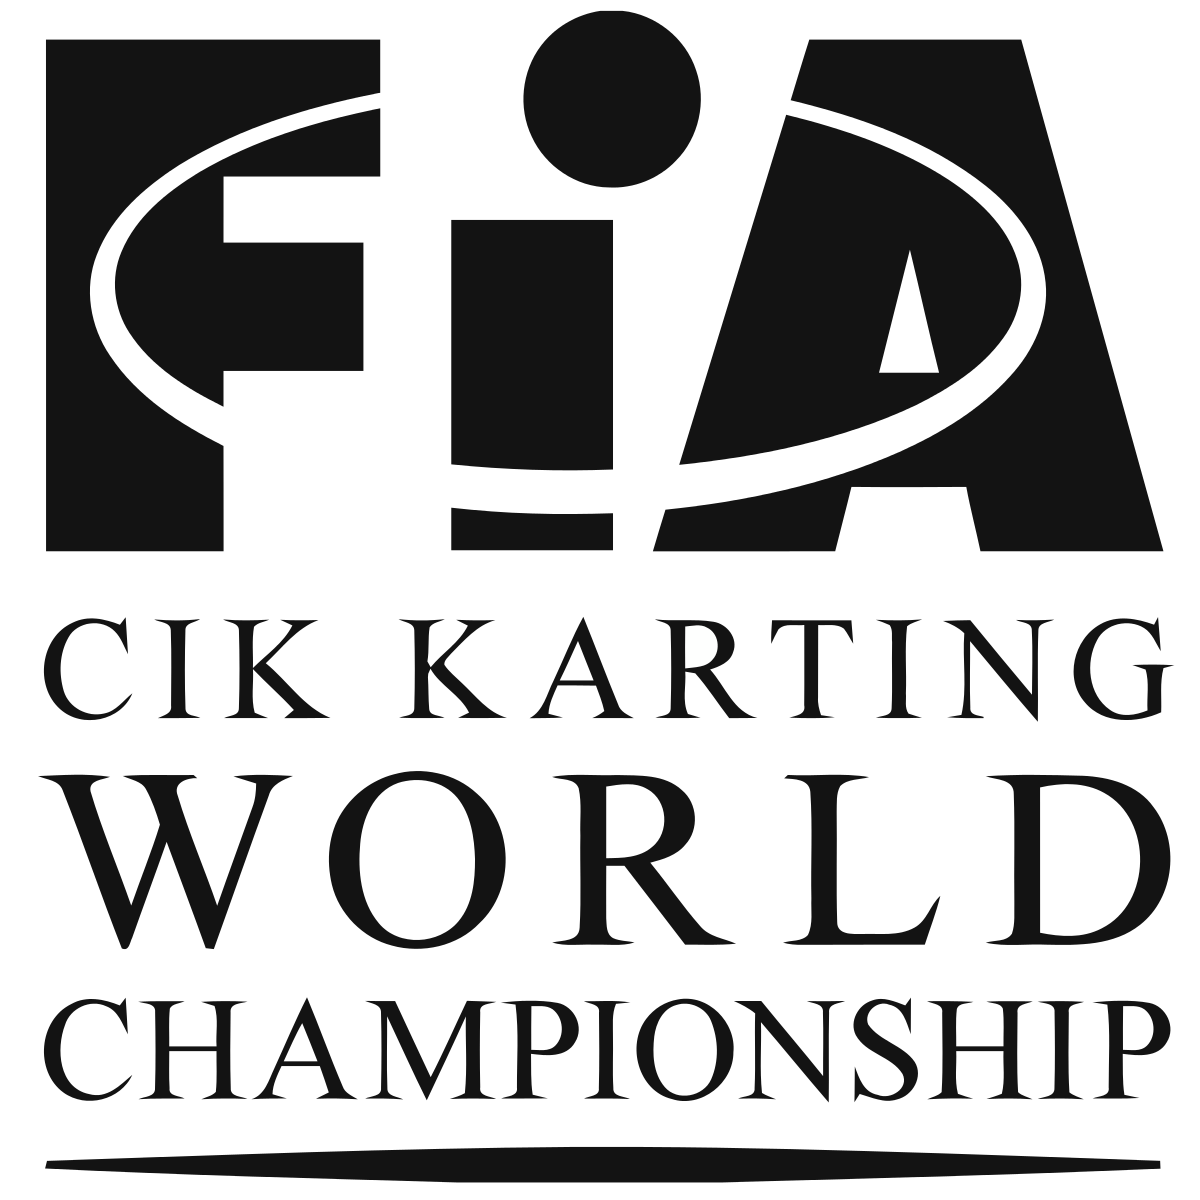 2015 FIA World Endurance Championship - Wikipedia